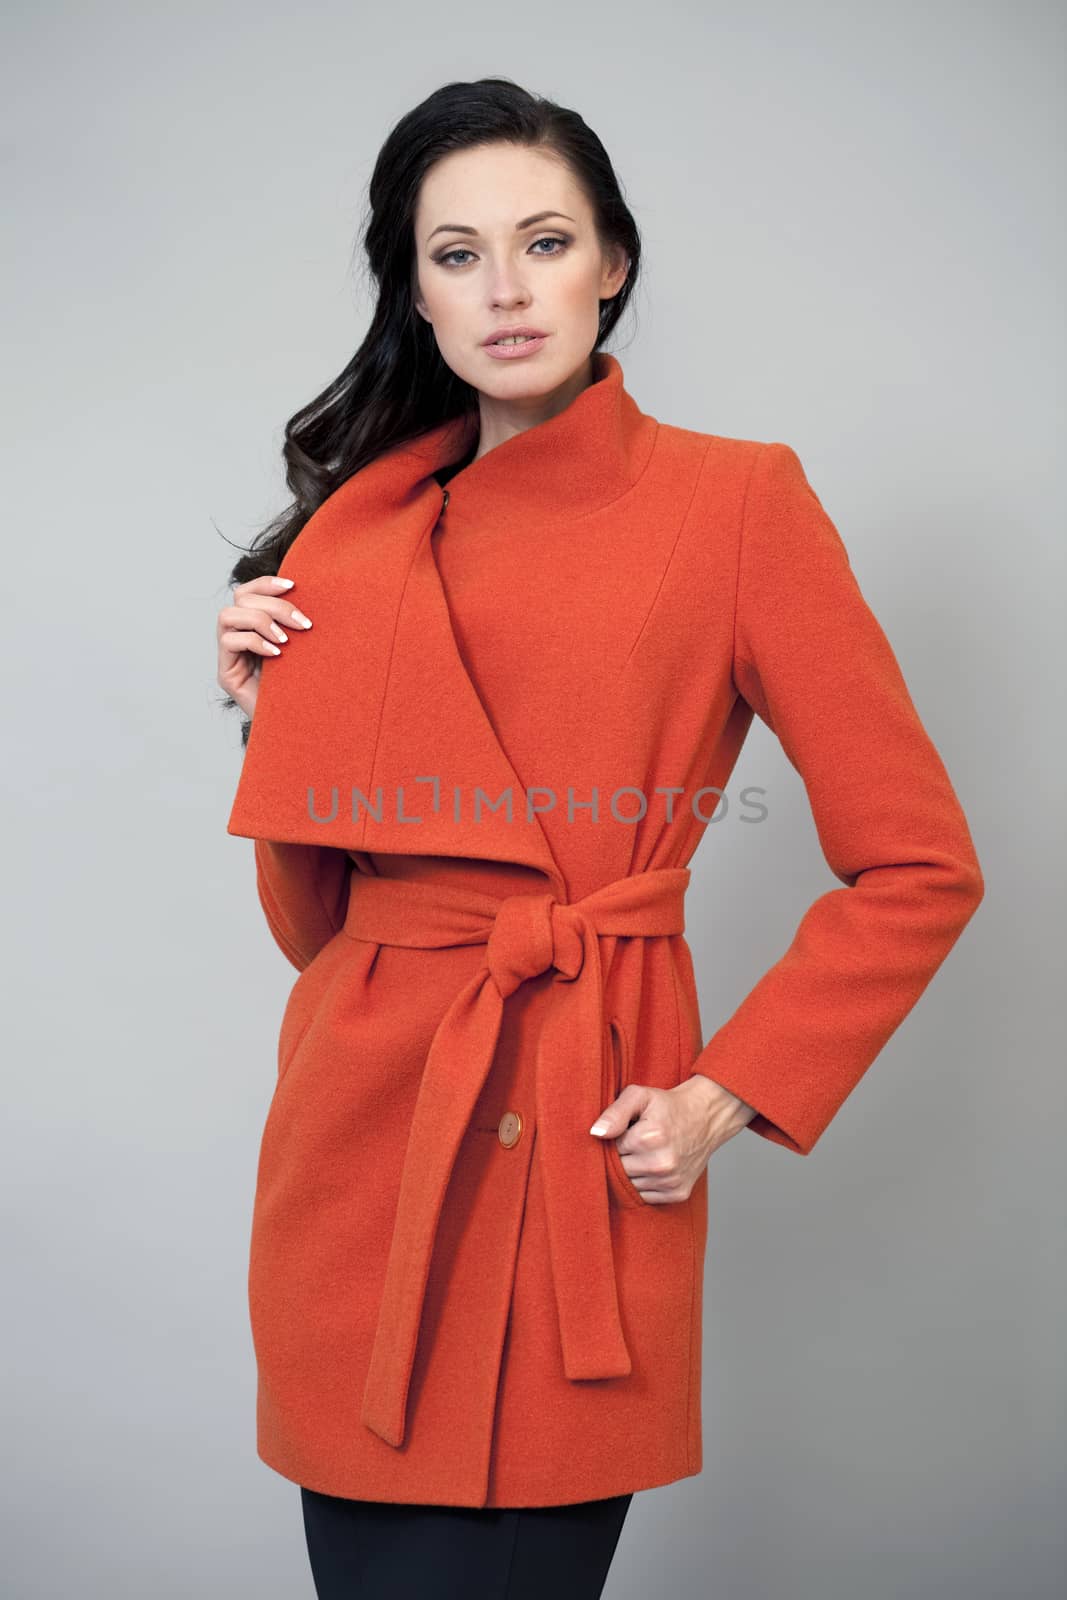 Beautiful women in a bright orange coat by andersonrise